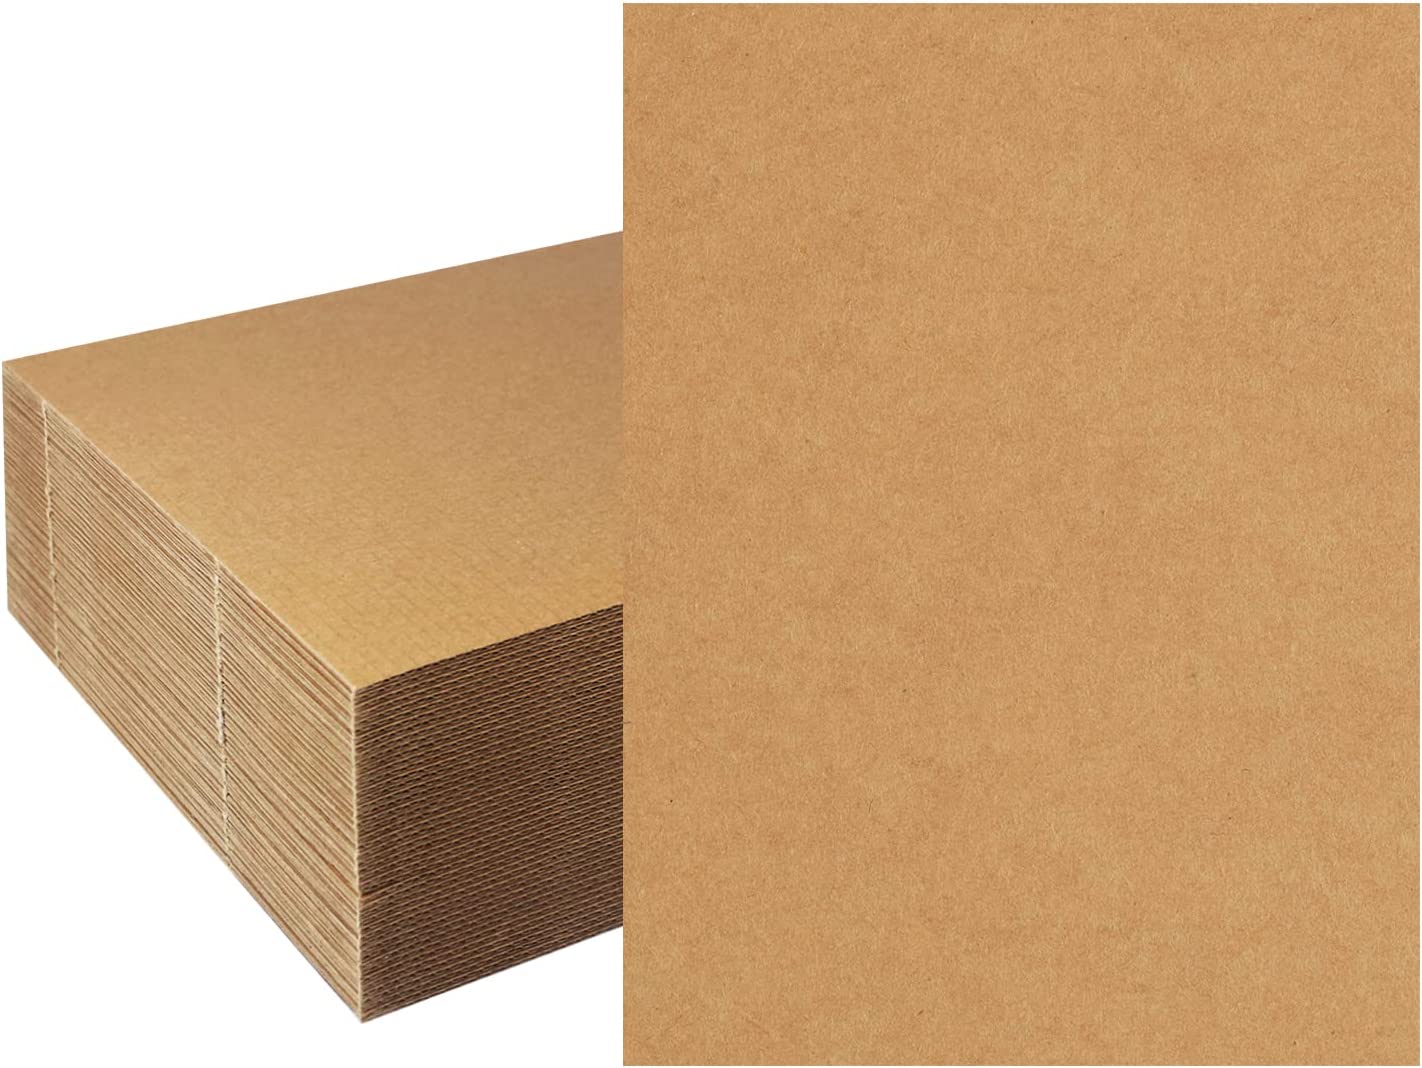 110 Pack Corrugated Cardboard Sheets 11 X 8.5 Inch Flat Cardboard